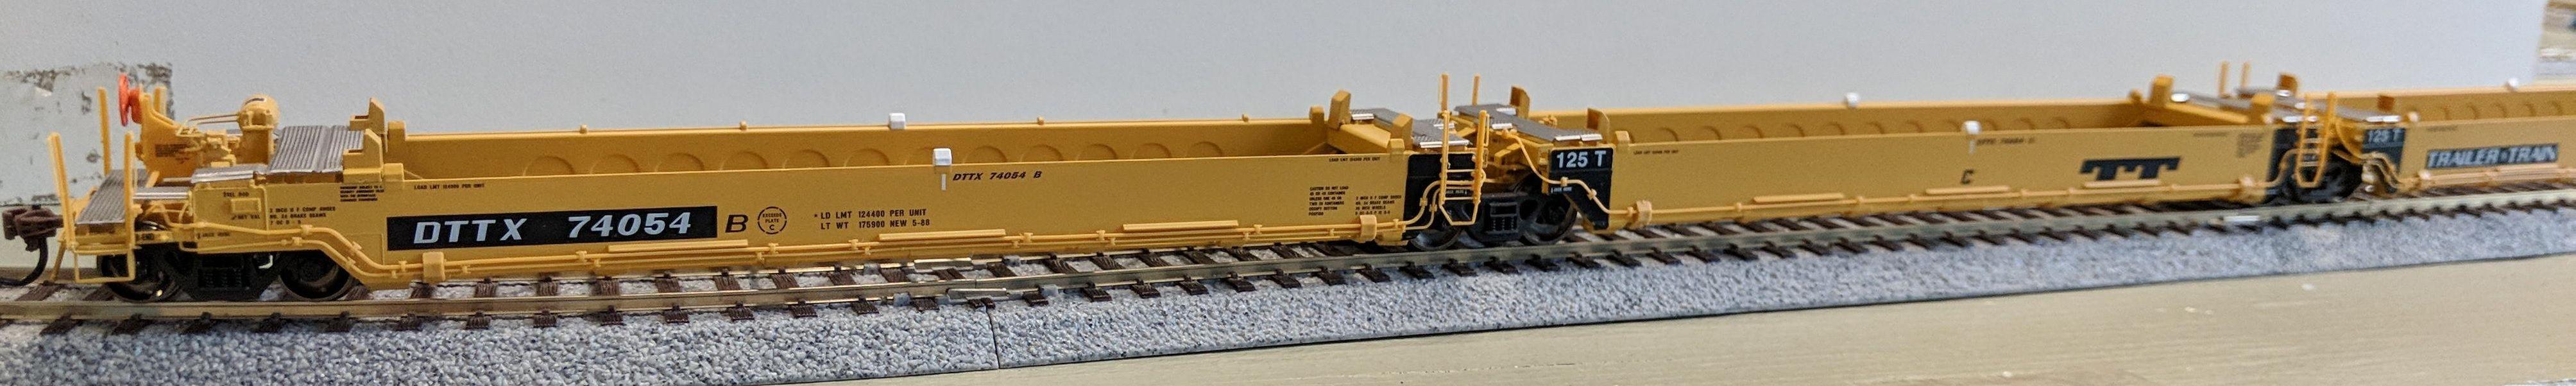 Rbox TTX Logo - Otter Valley Railroad Model Trains - Aylmer, Ontario Canada :: HO ...